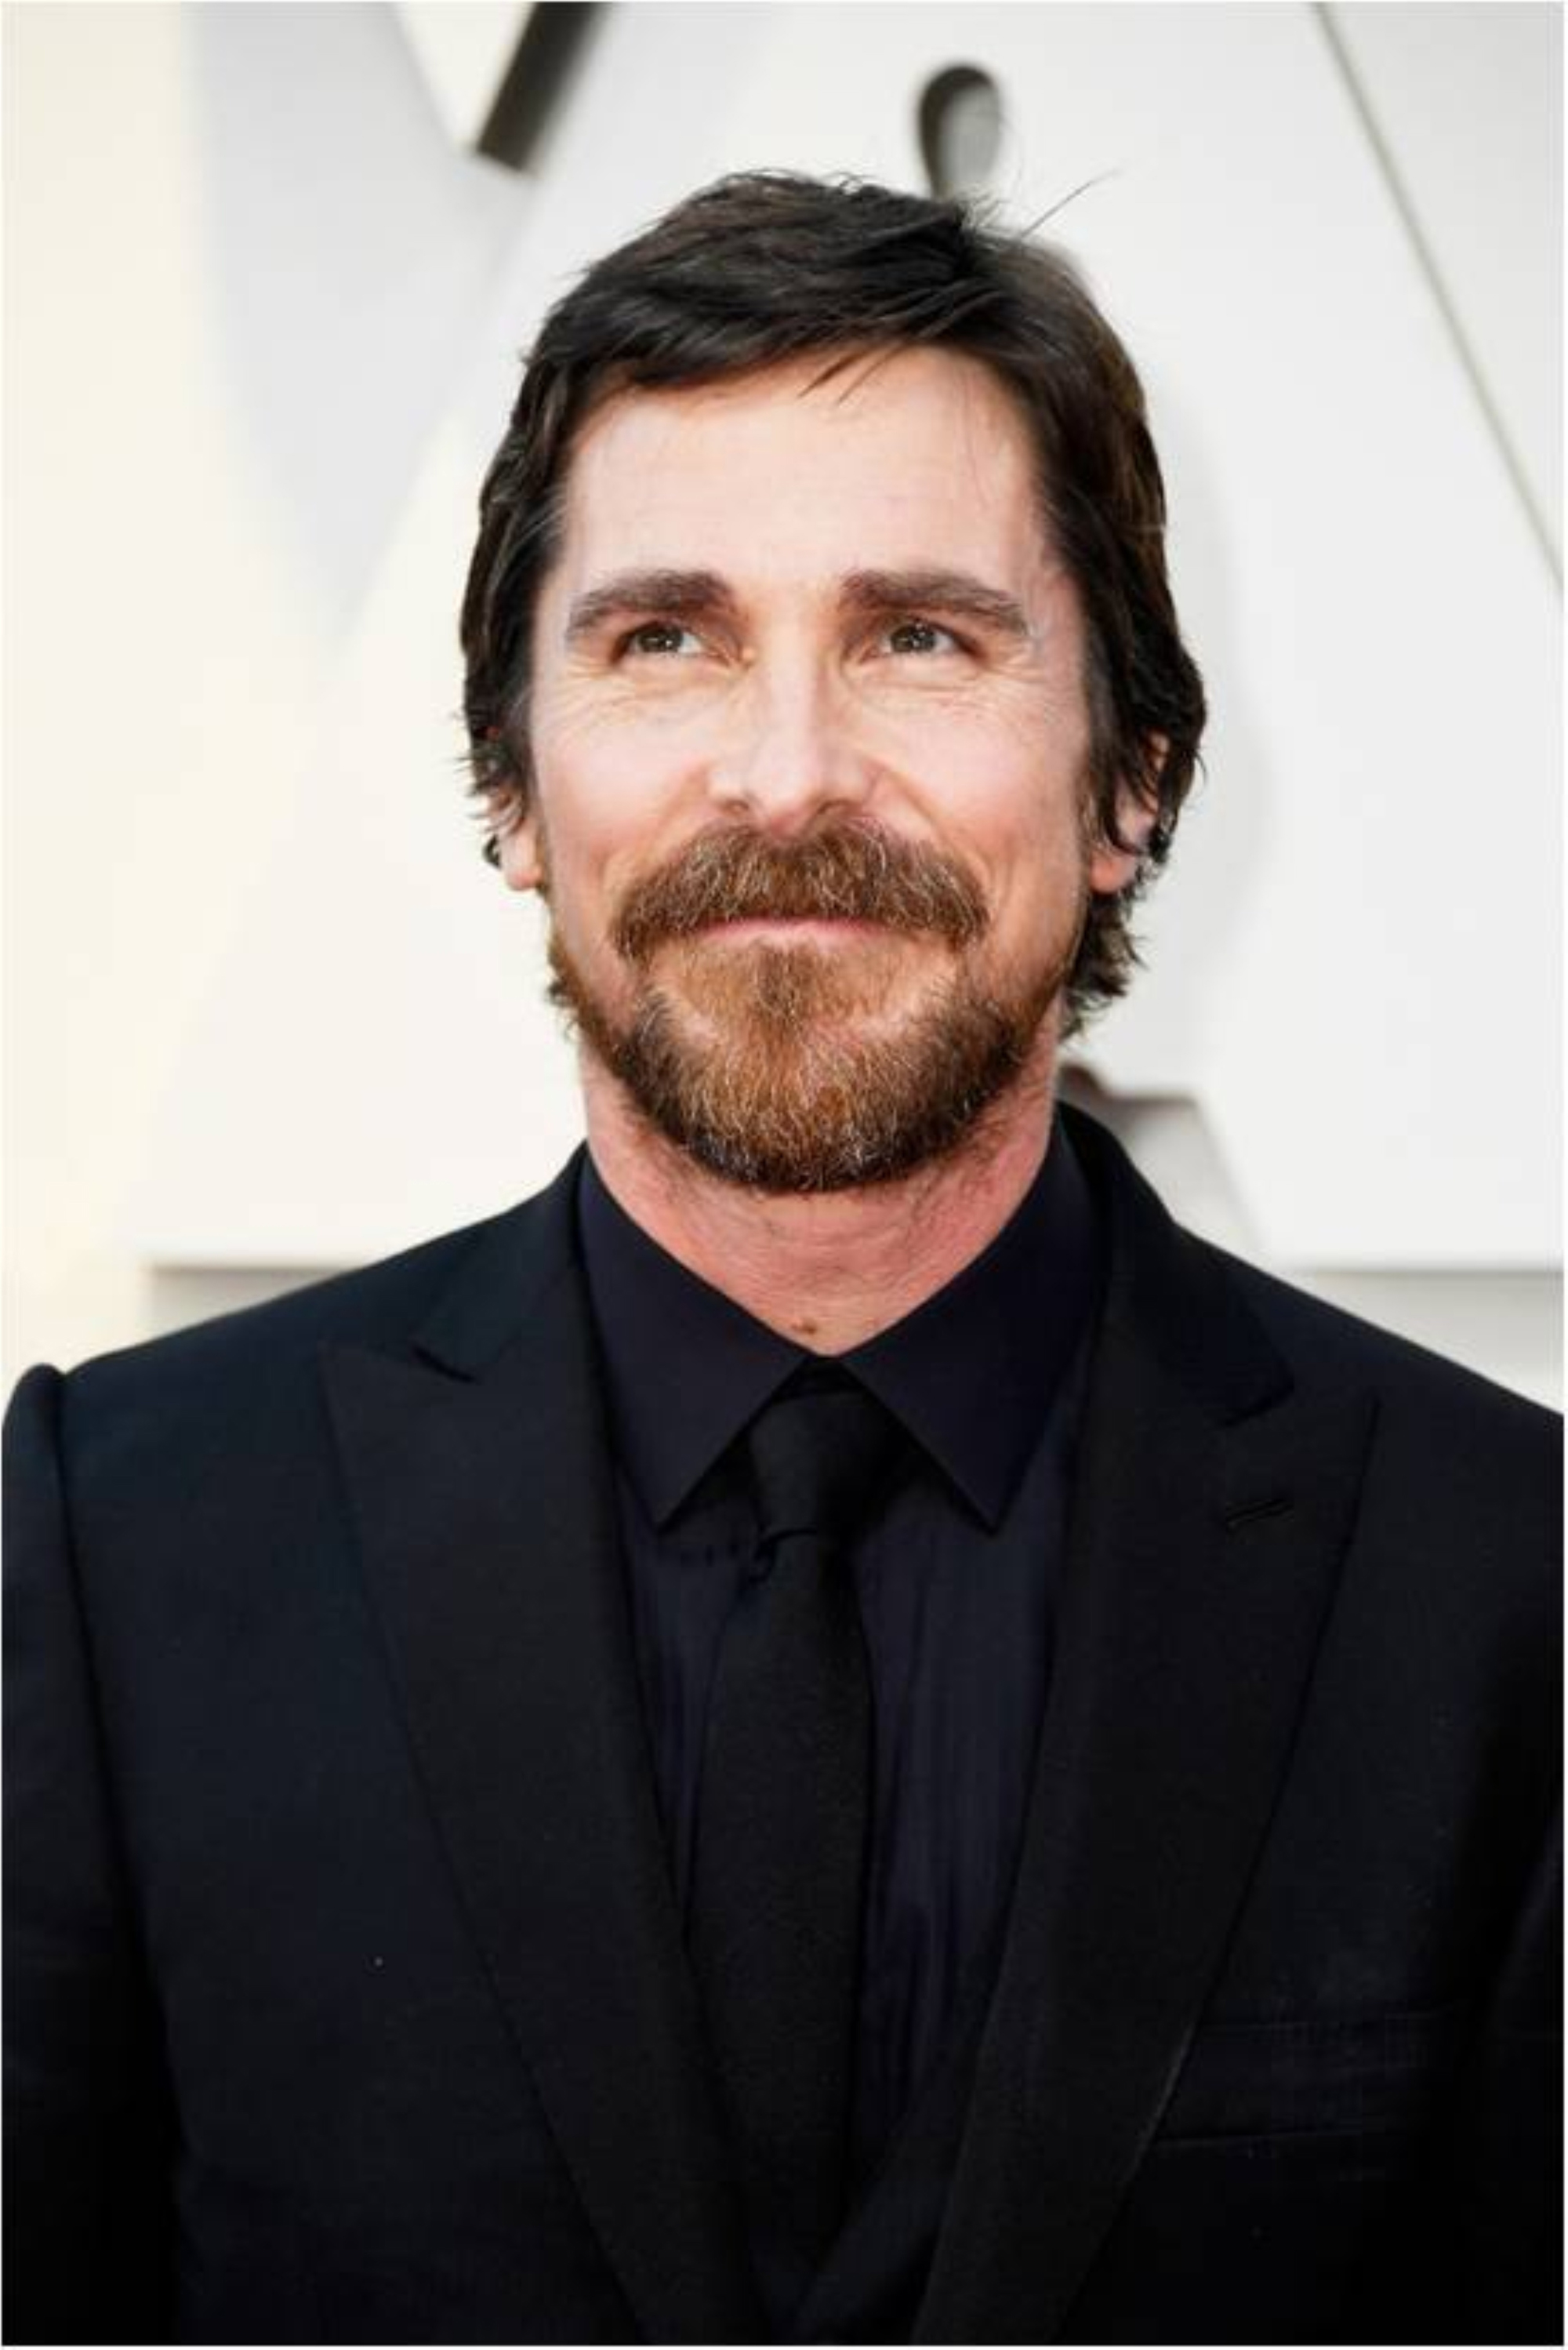 Christian Bale wearing the Santos de Cartier